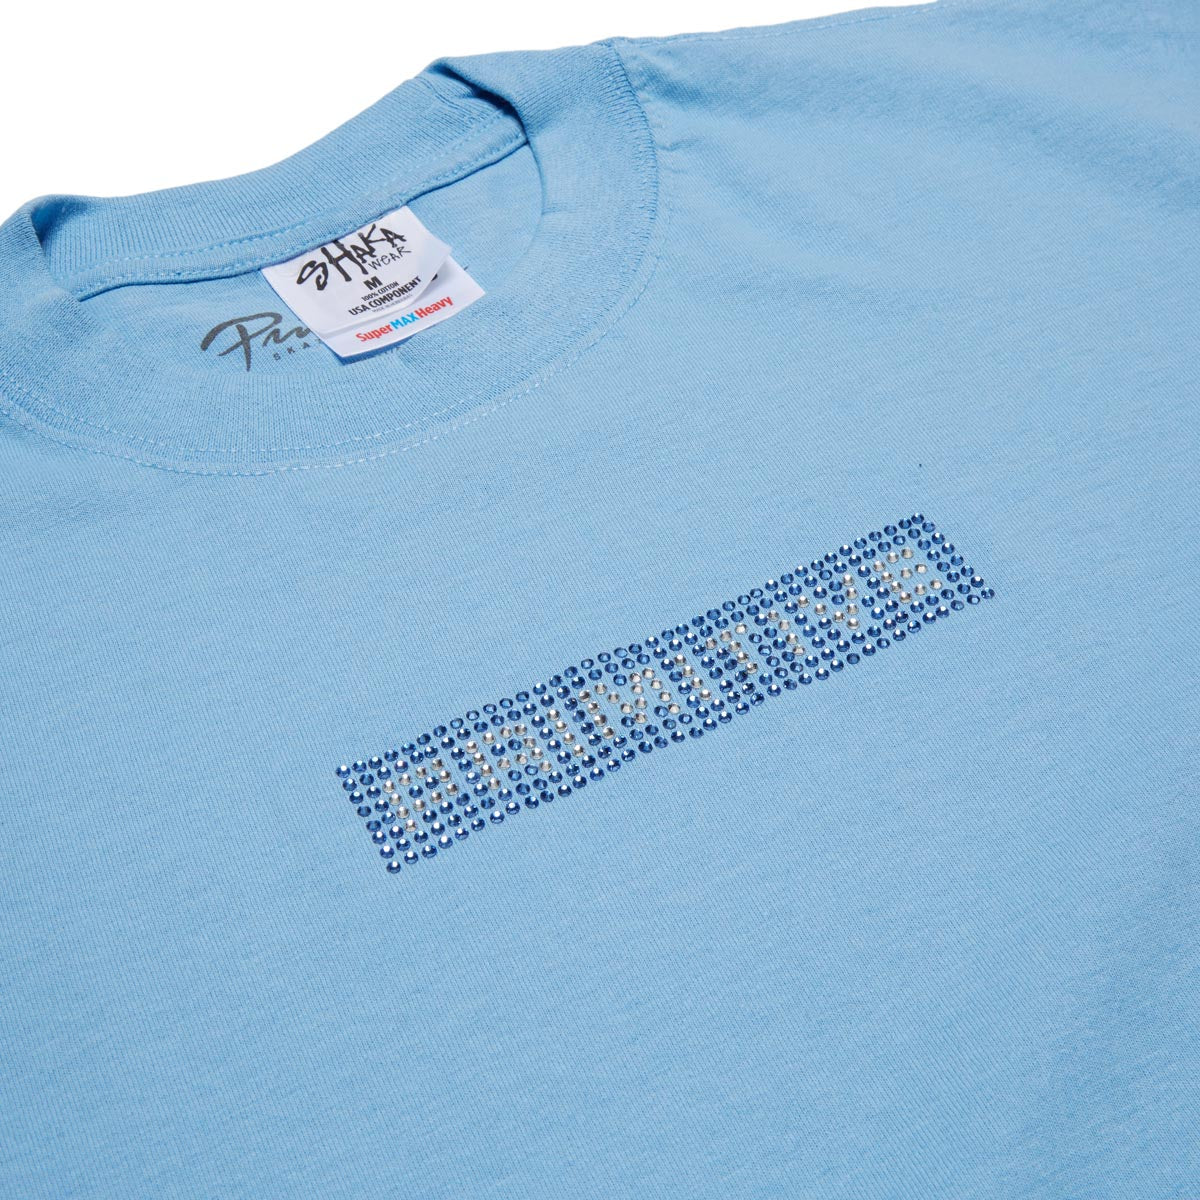 Primitive Boxed Rhinestone T-Shirt - Light Blue image 2